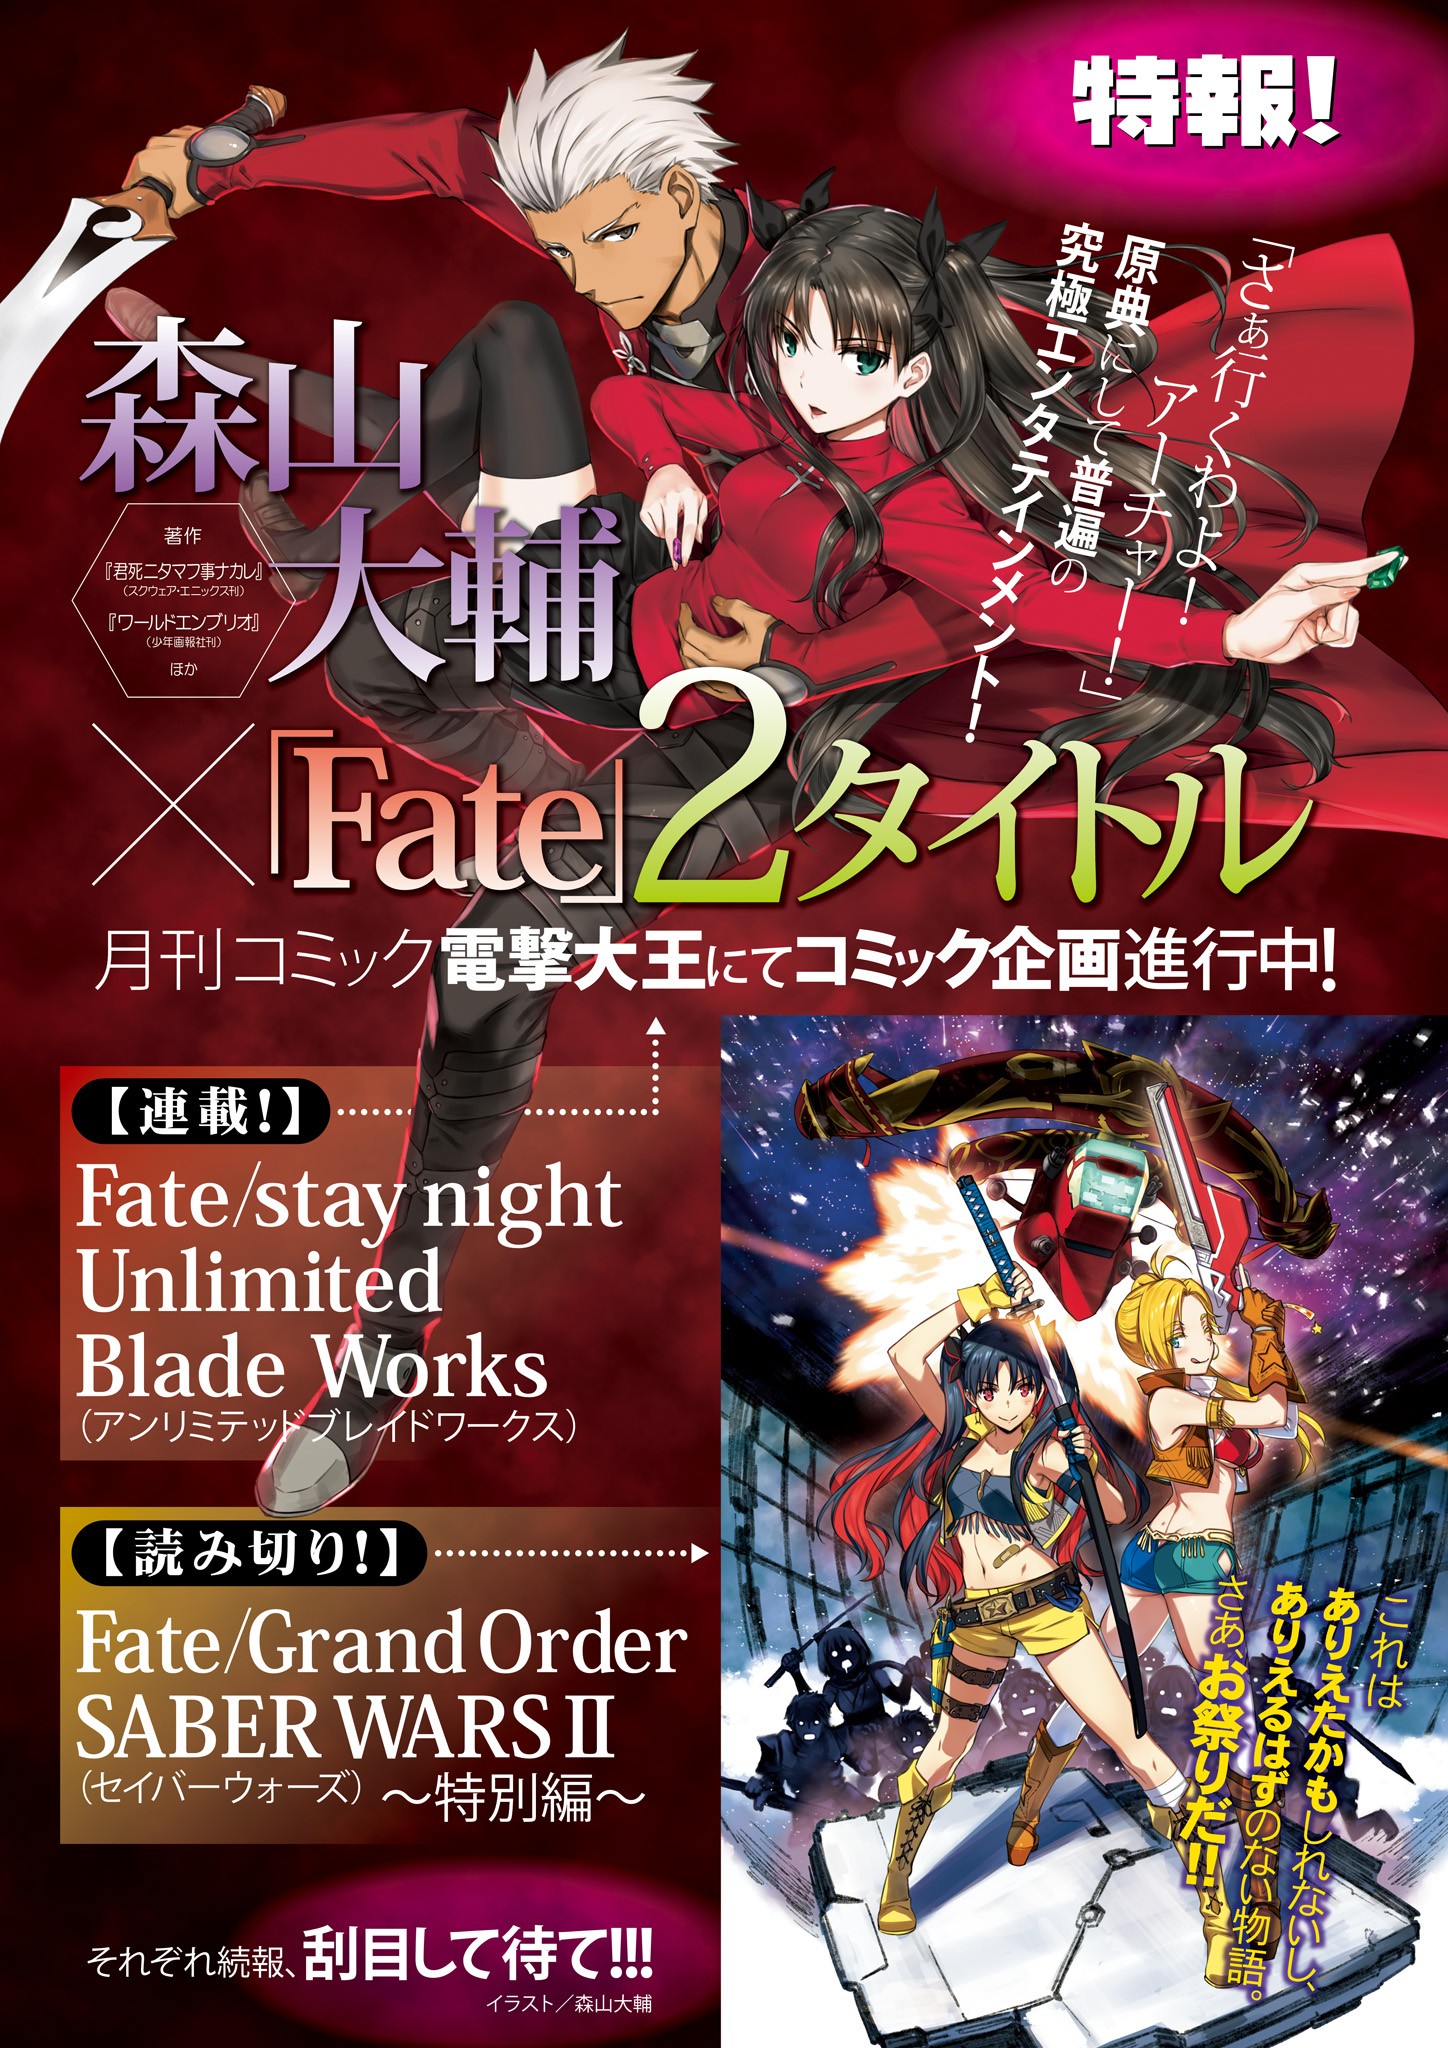 Fate/Stay Night: Unlimited Blade Works tendrá un manga este año — Kudasai